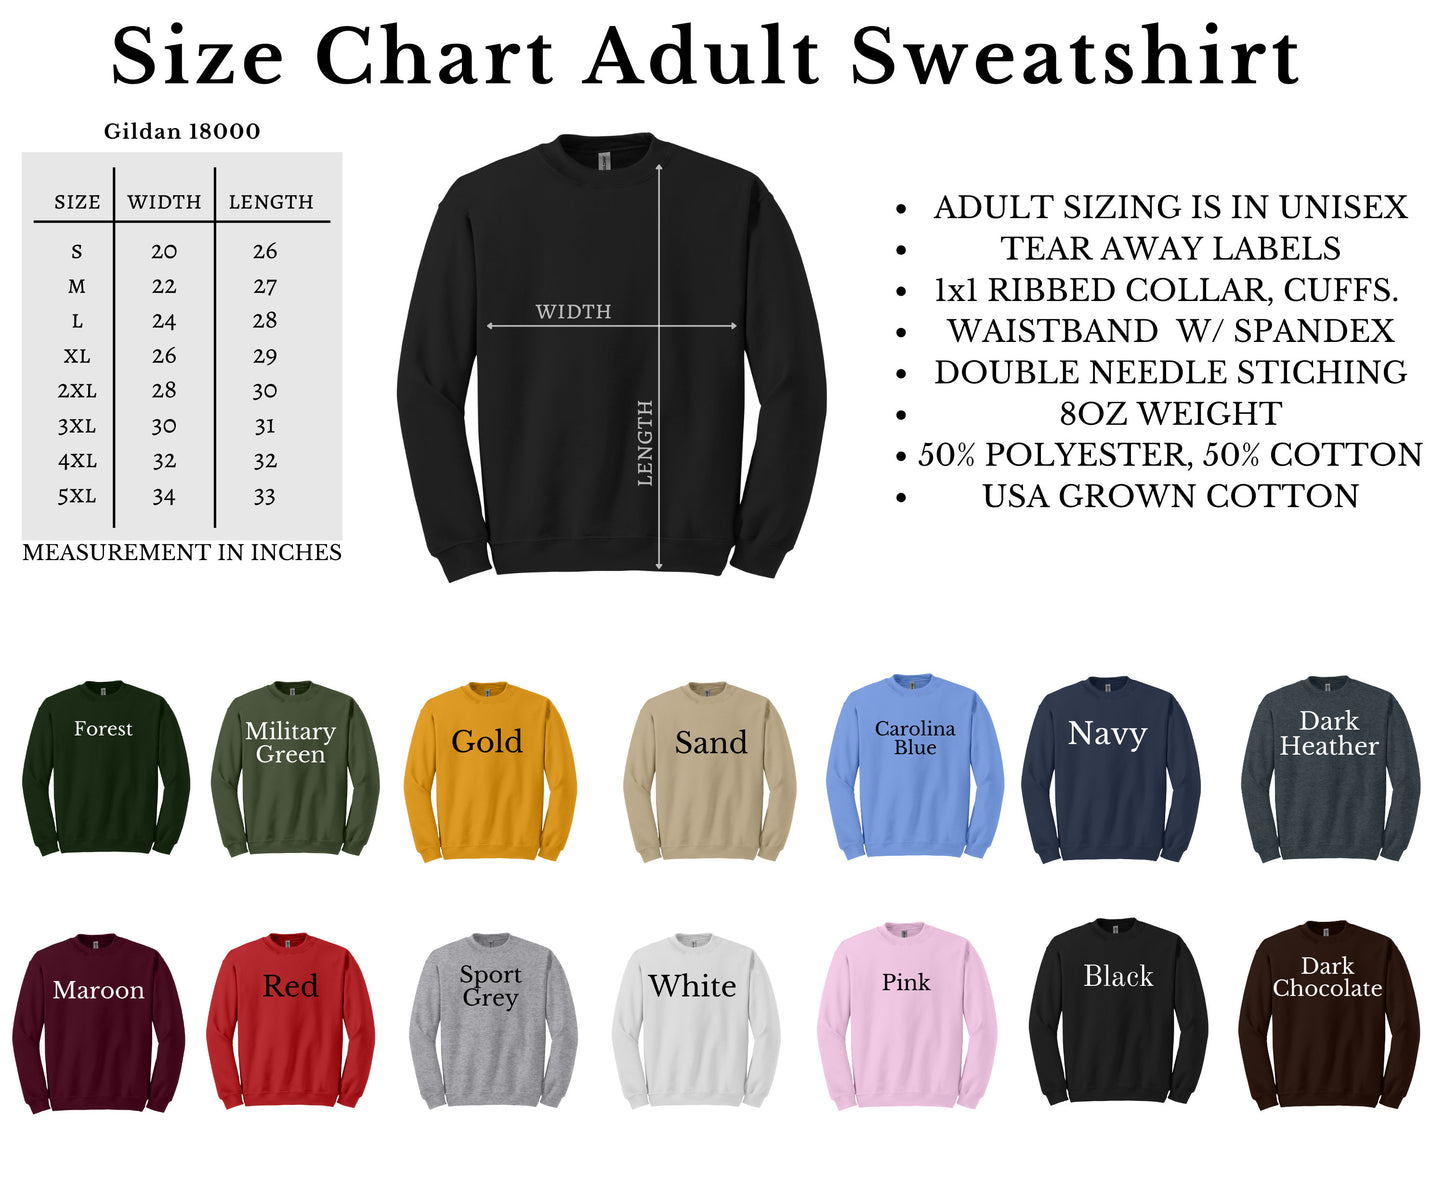 I Appreciate You Sweatshirt, I Appreciate You Shirt, I Appreciate You Crewneck, I Appreciate You Sweater, Oversized Sweater, Comfy Sweater